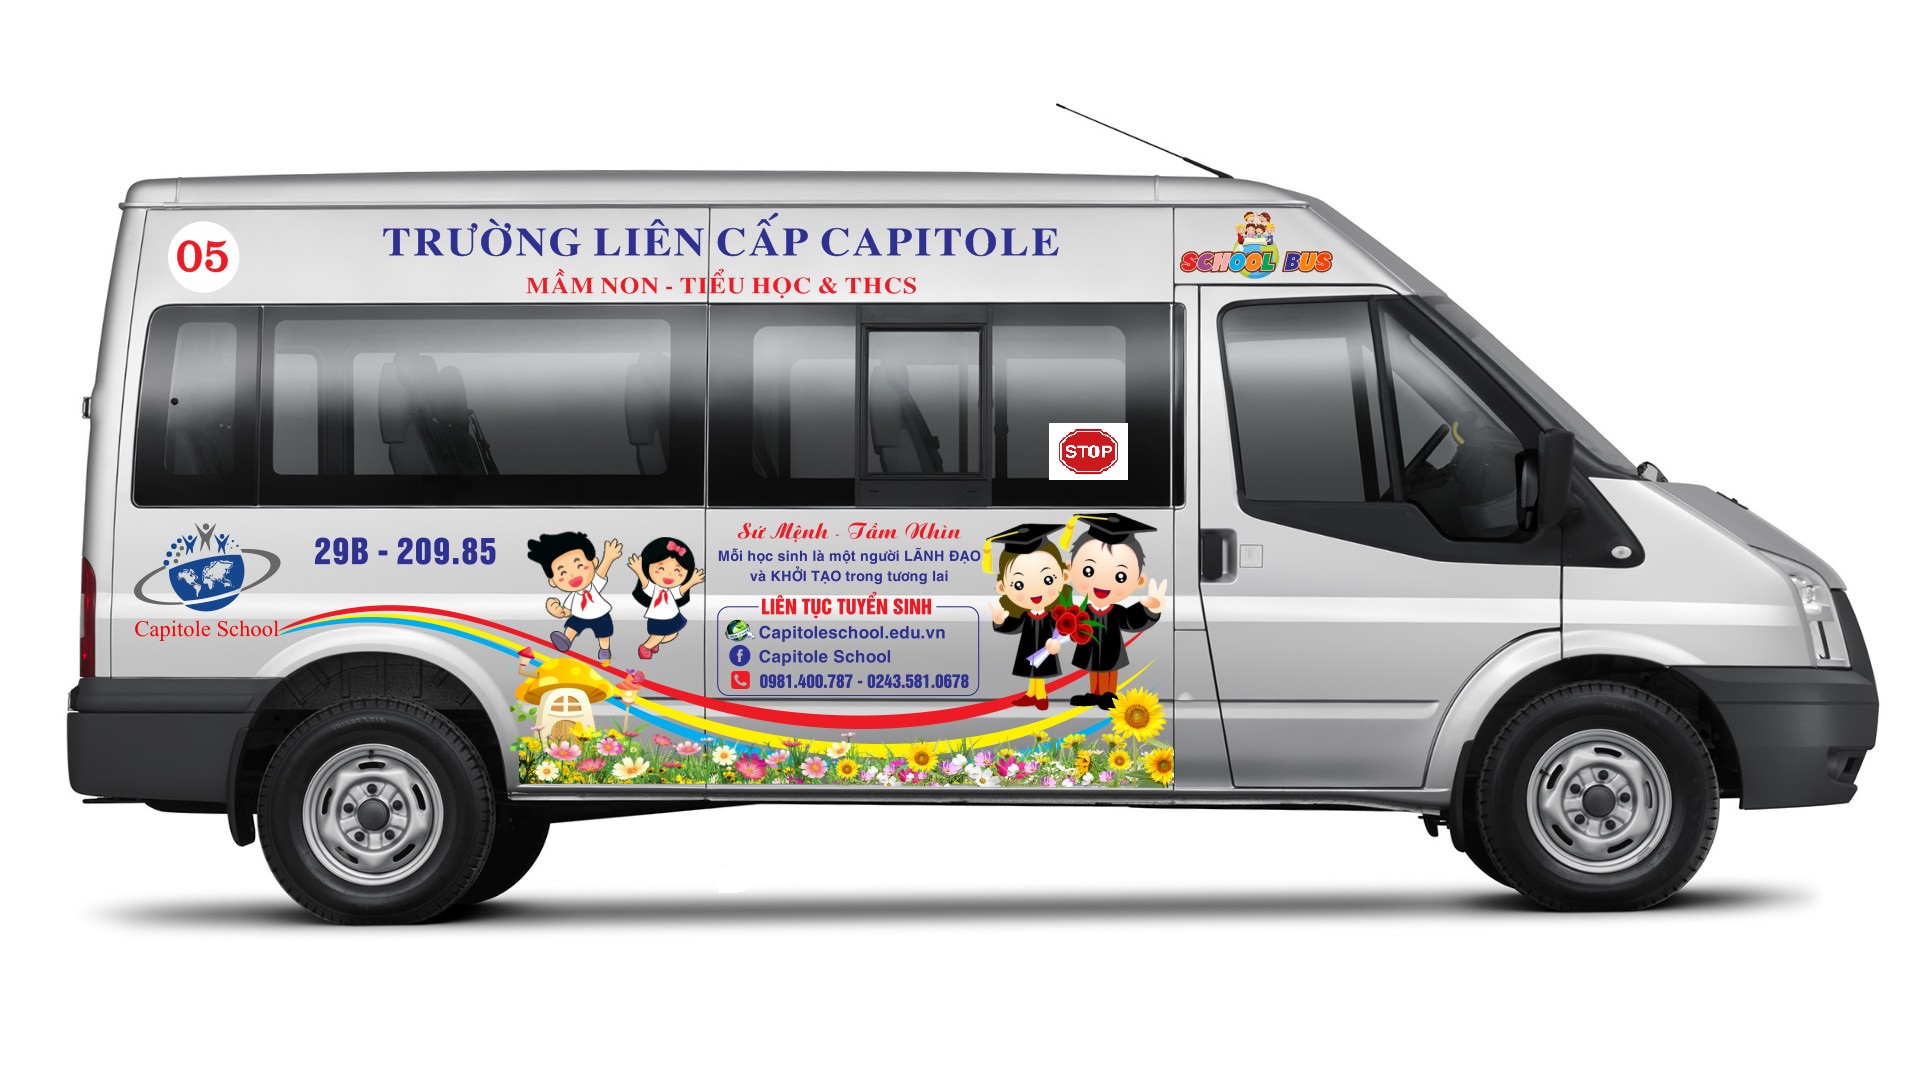 Capitole school bus